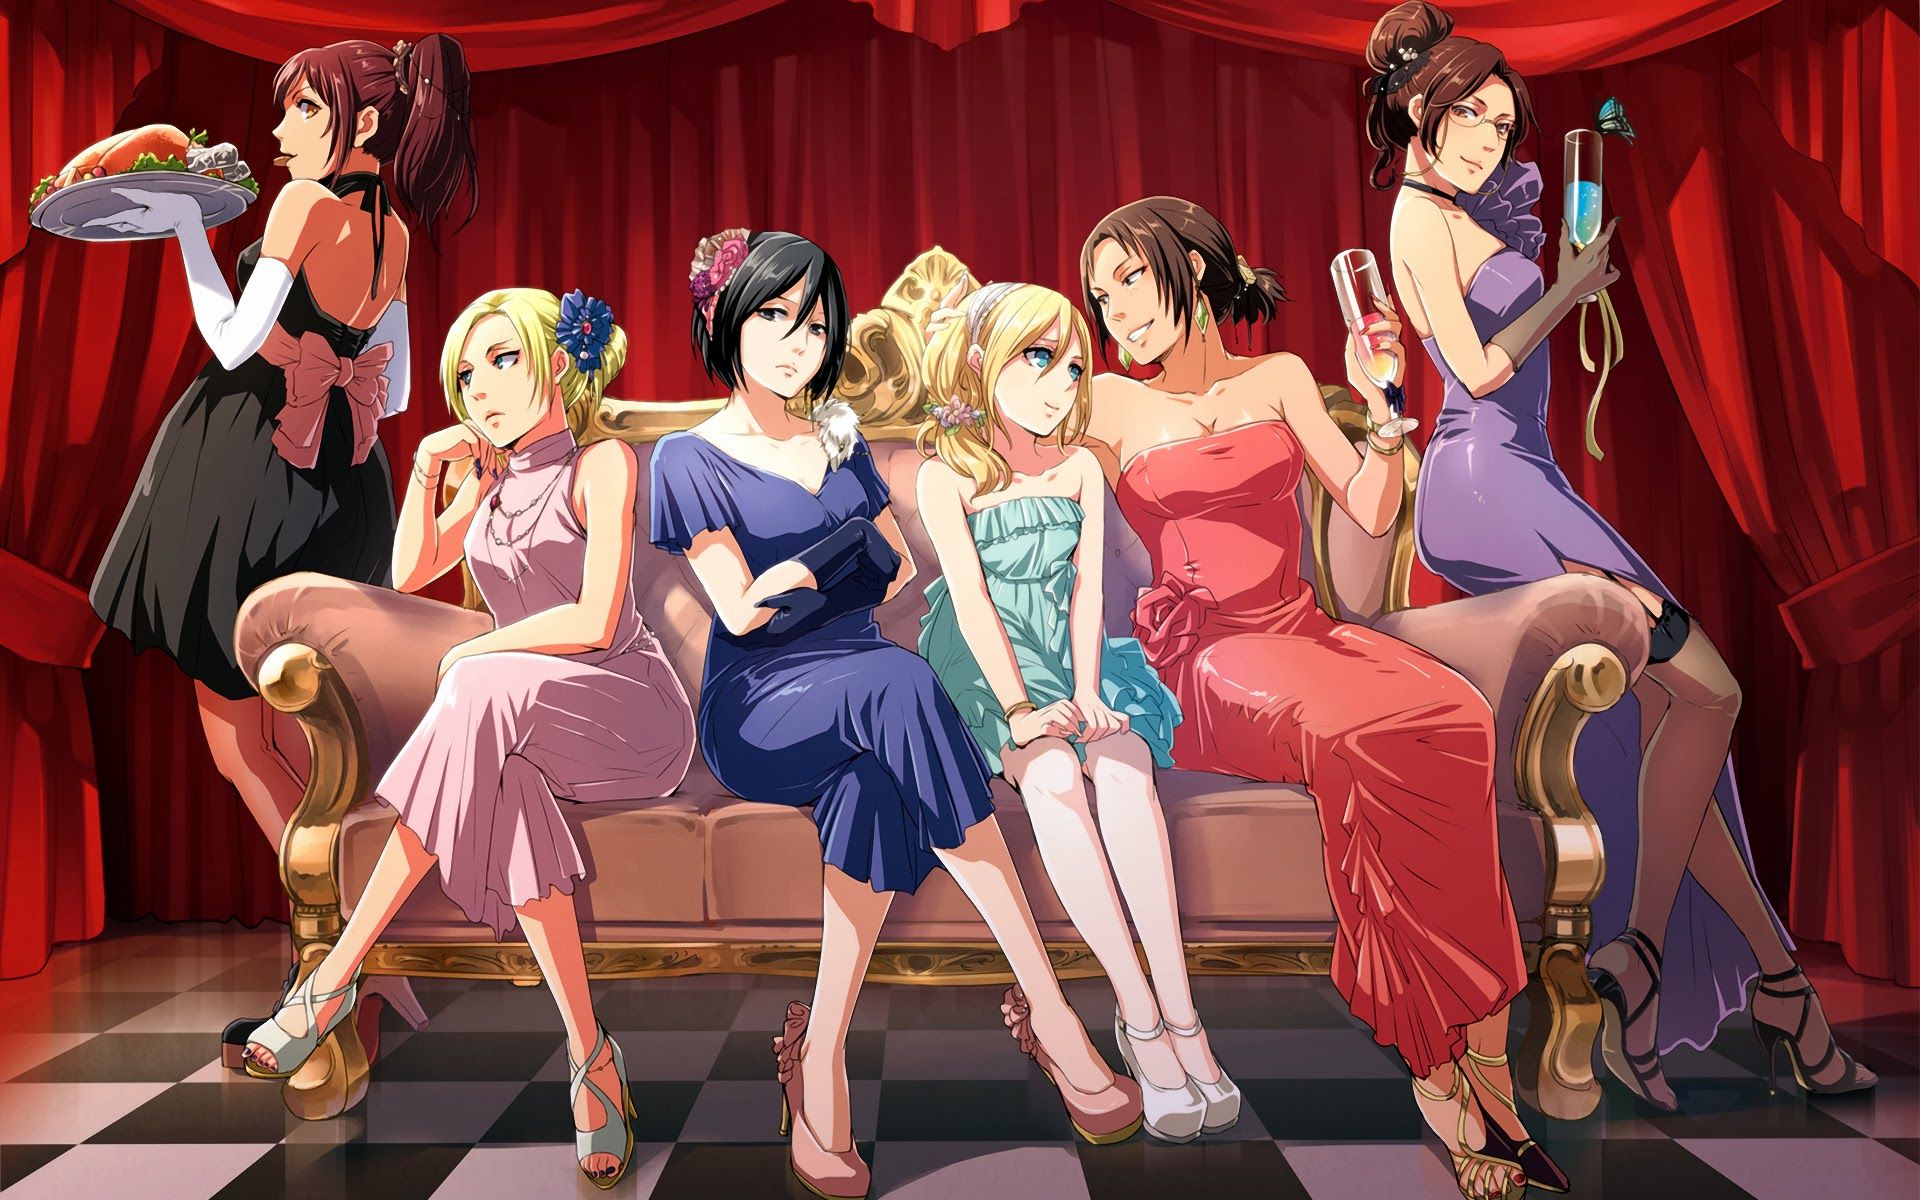 anime art wallpaper: Wallpaper of The Day: Attack on Titan Girls